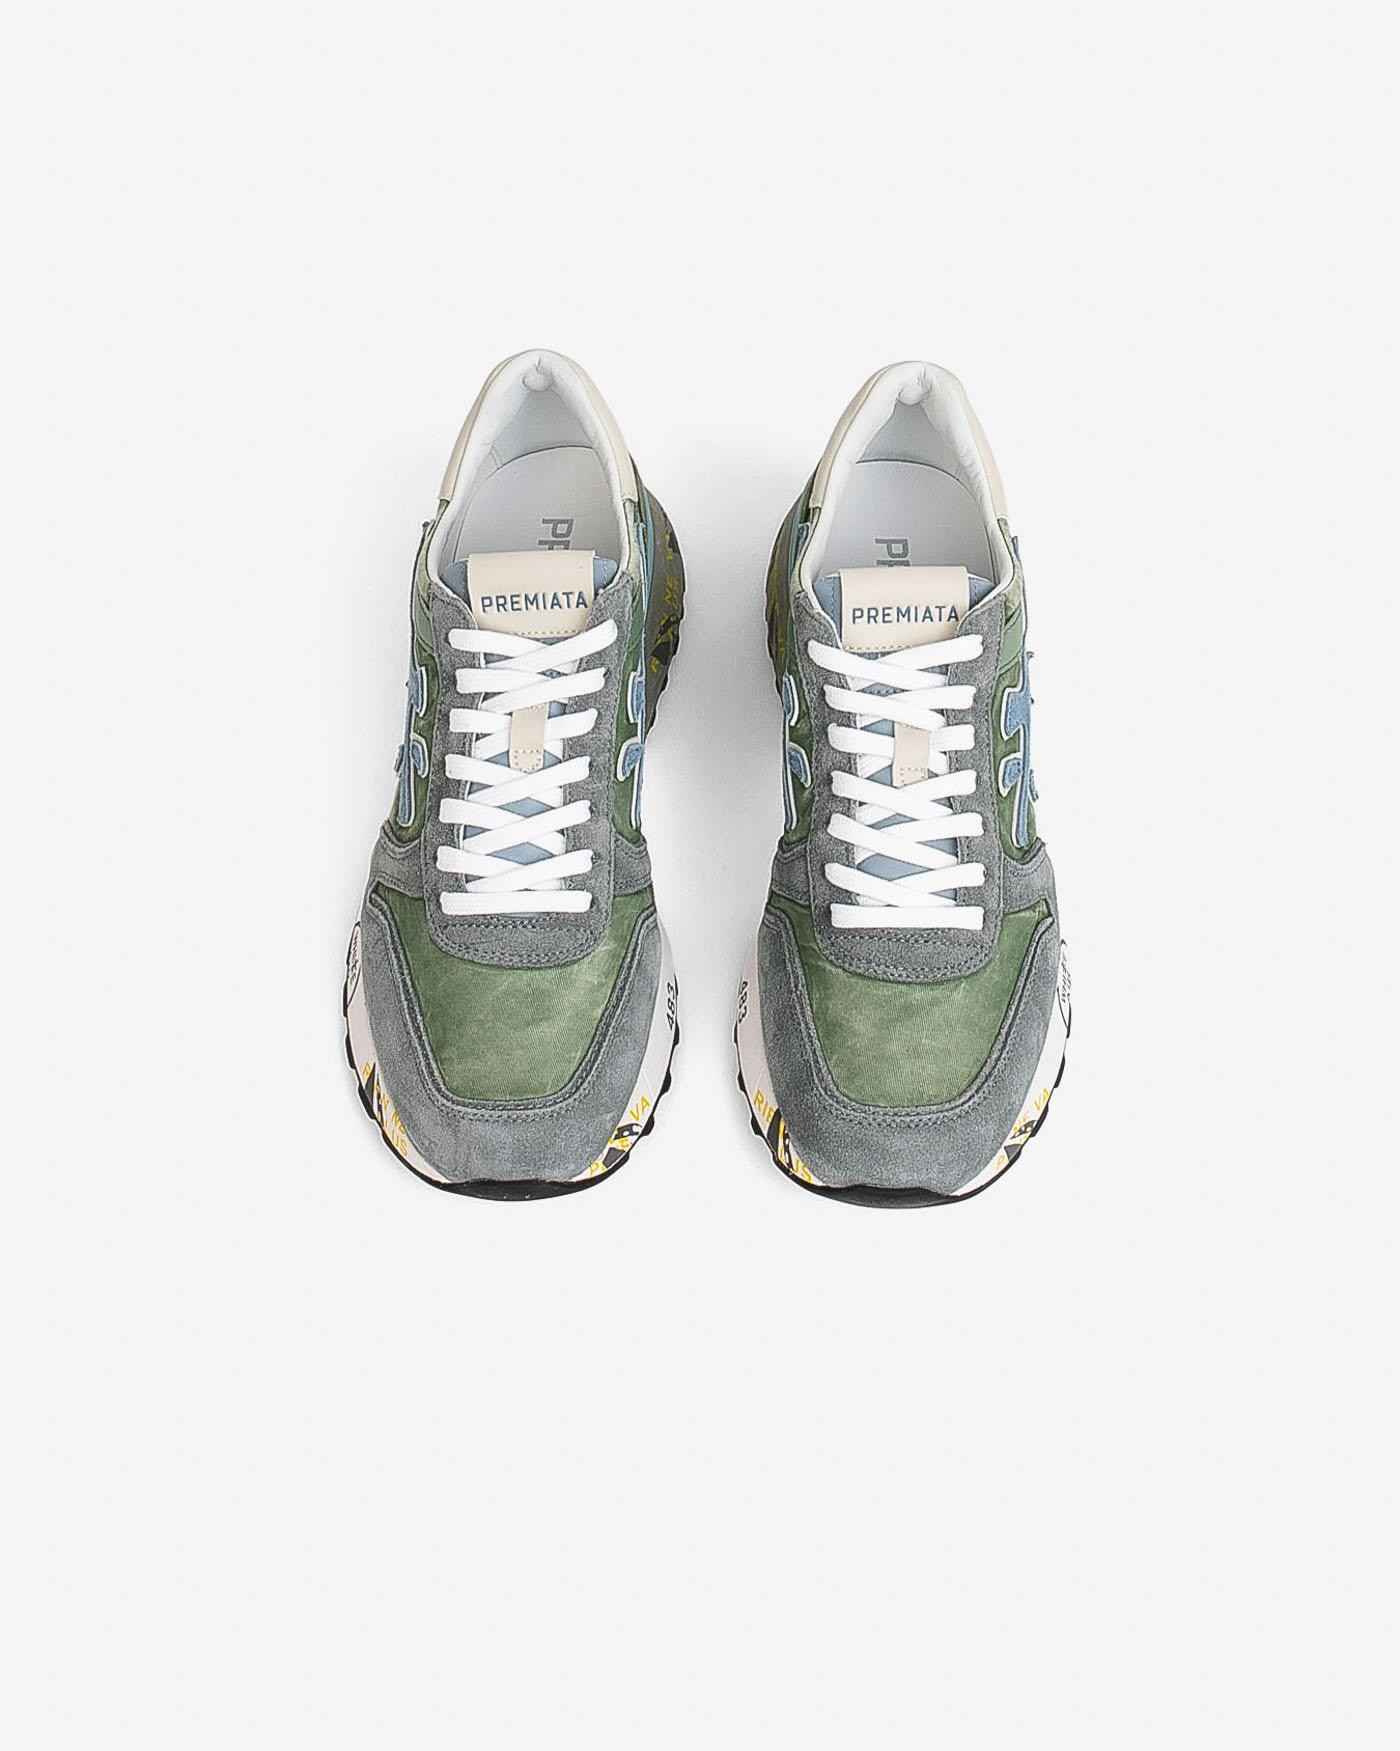 premiata-zapatillas-mick-var-6617-sneakers-green-verdes-6